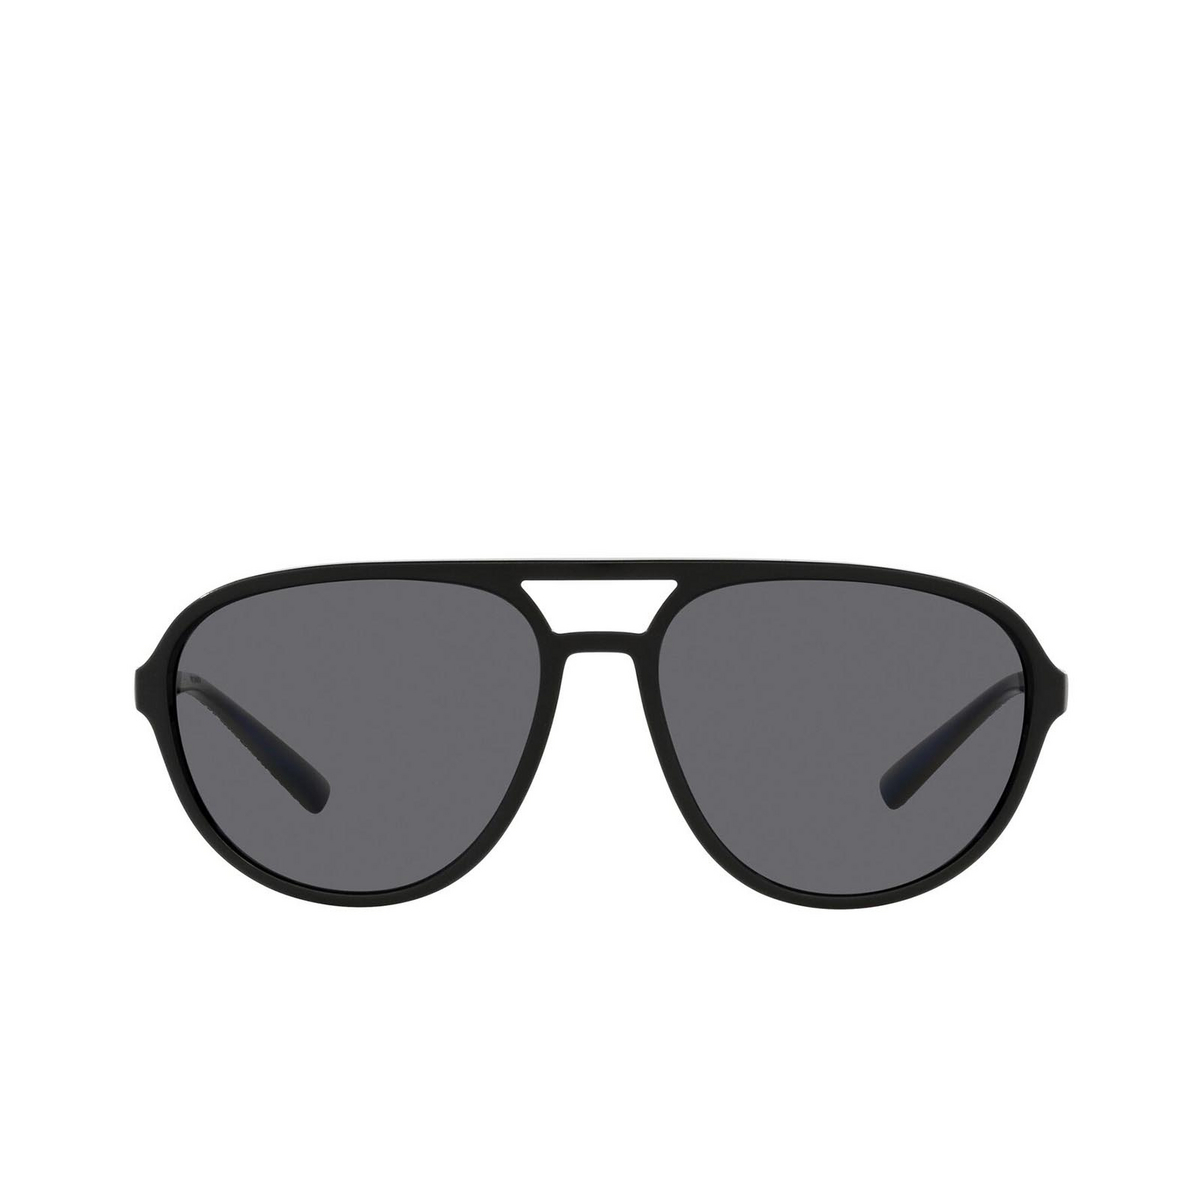 Dolce & Gabbana® Aviator Sunglasses: DG6150 color 252581 Matte Black - 1/3